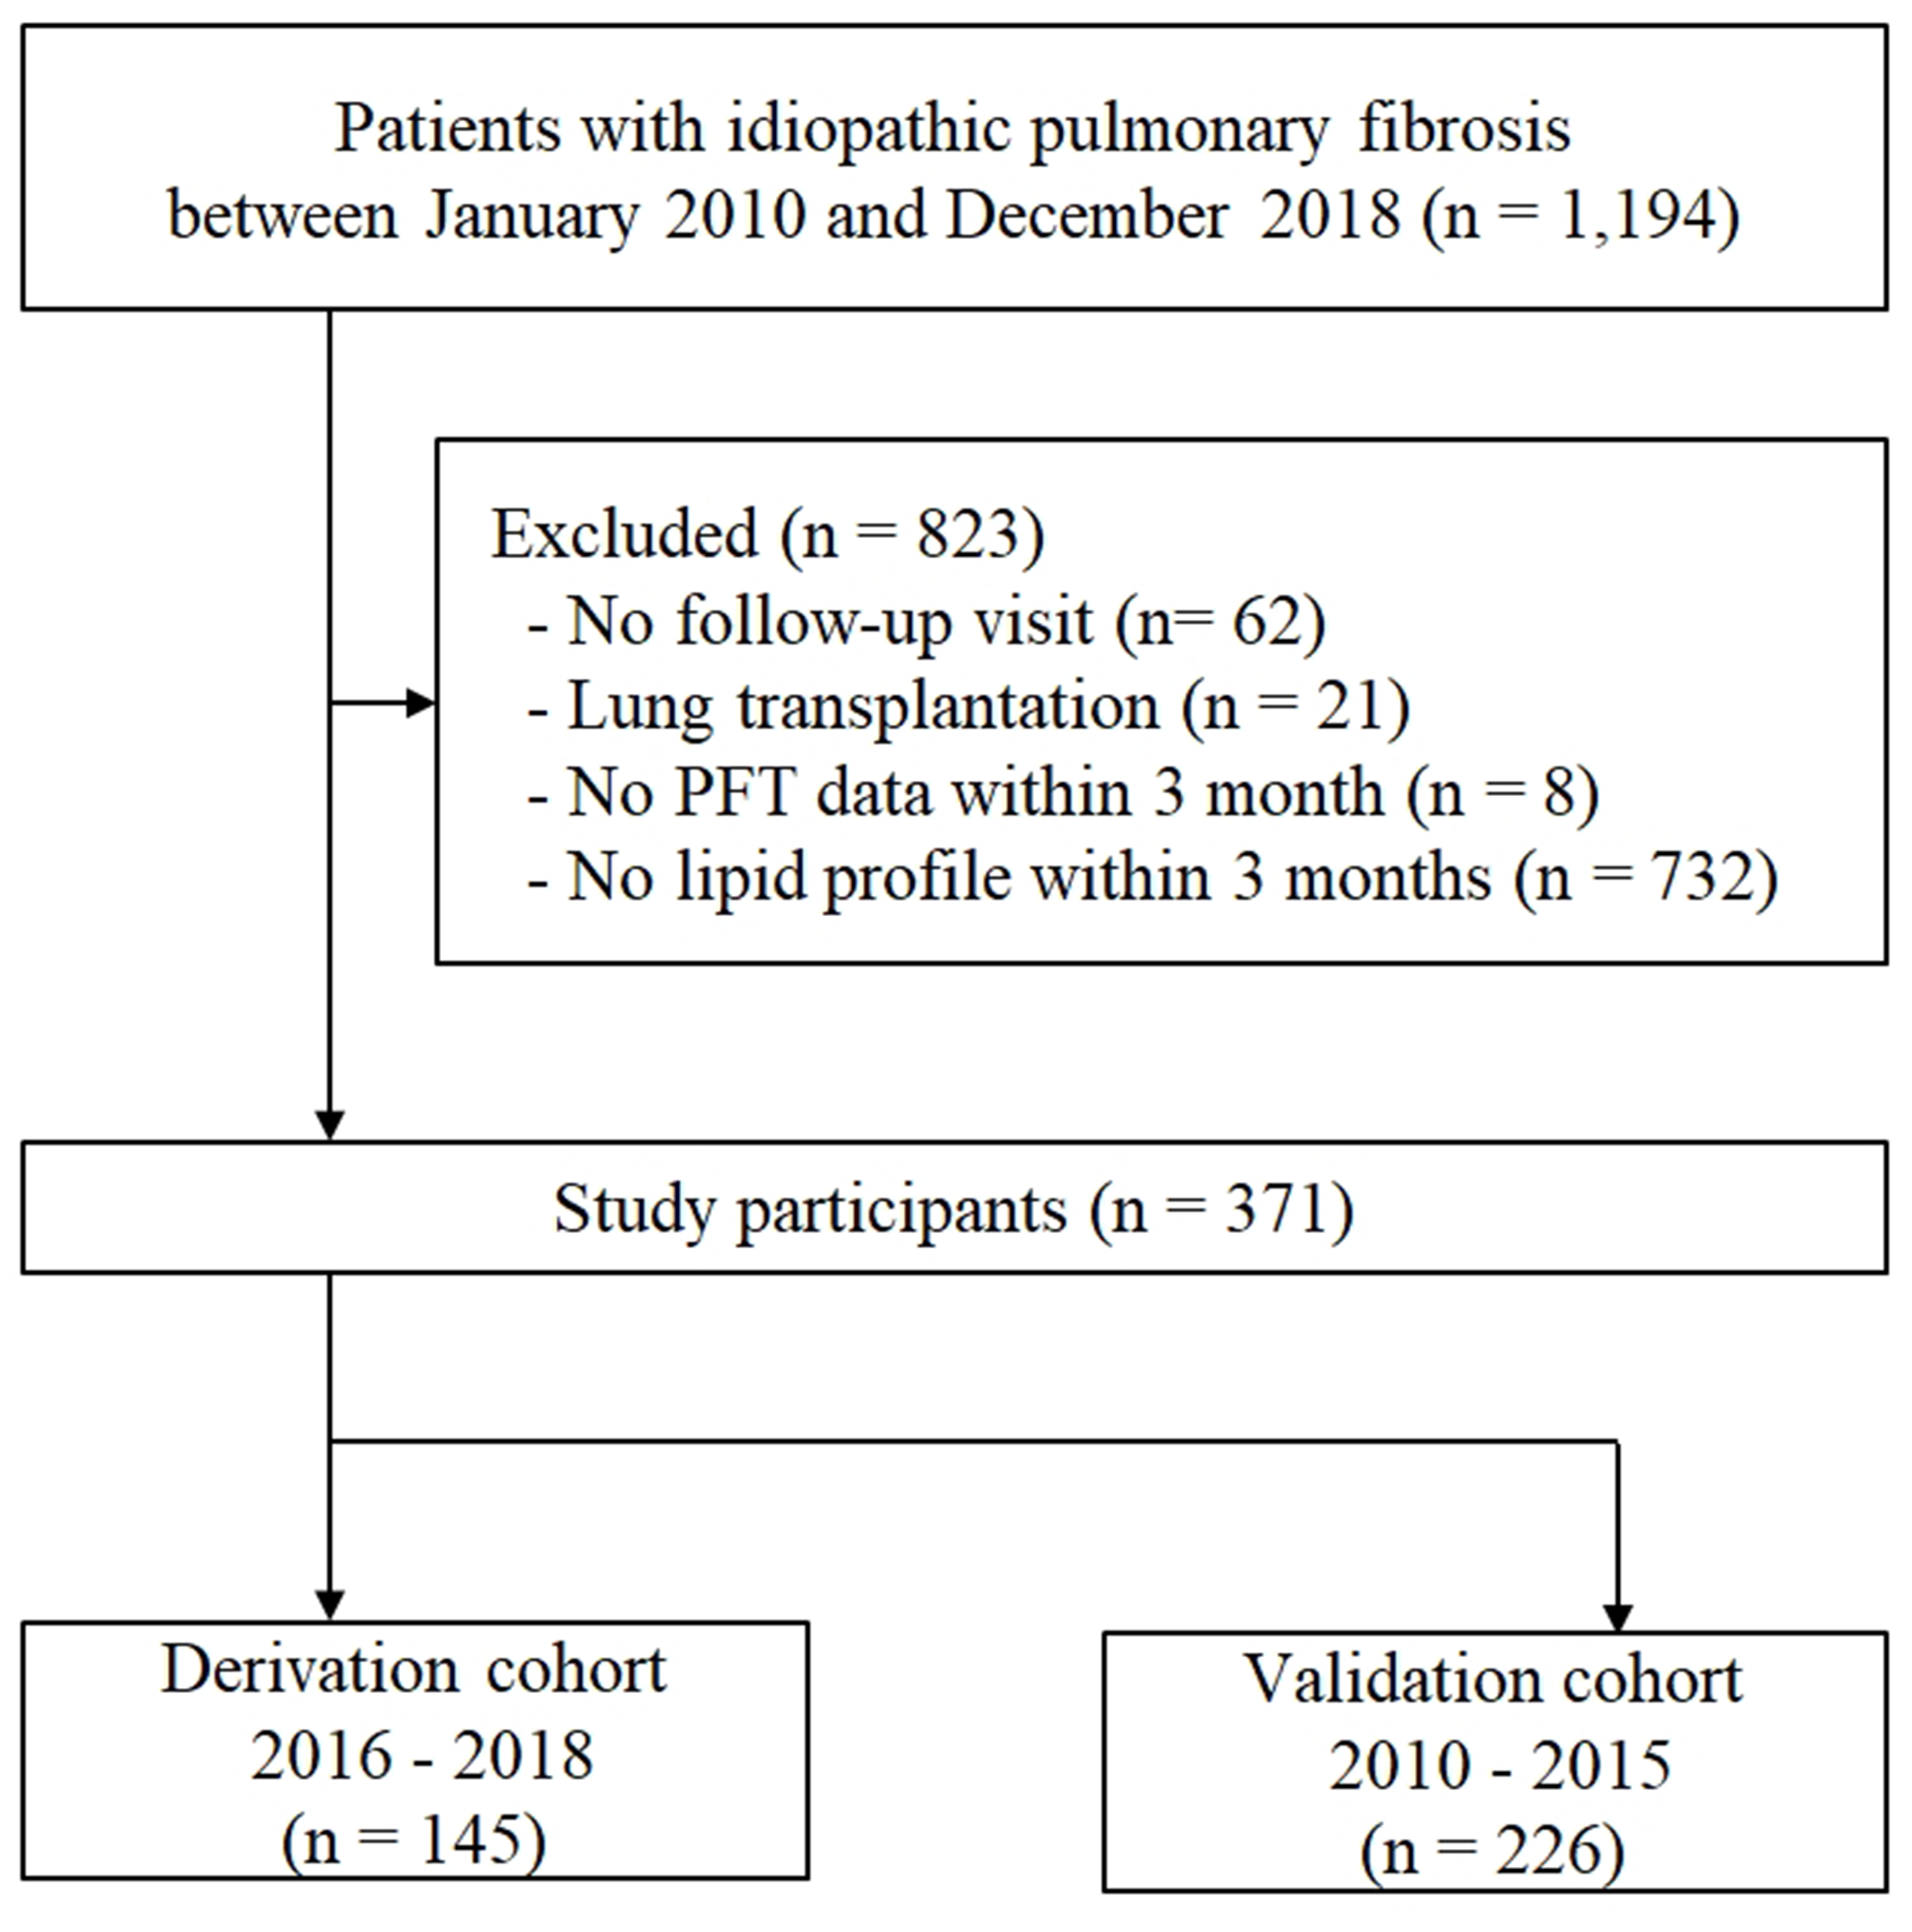 Blood lipid profiles as a prognostic biomarker in idiopathic pulmonary fibrosis